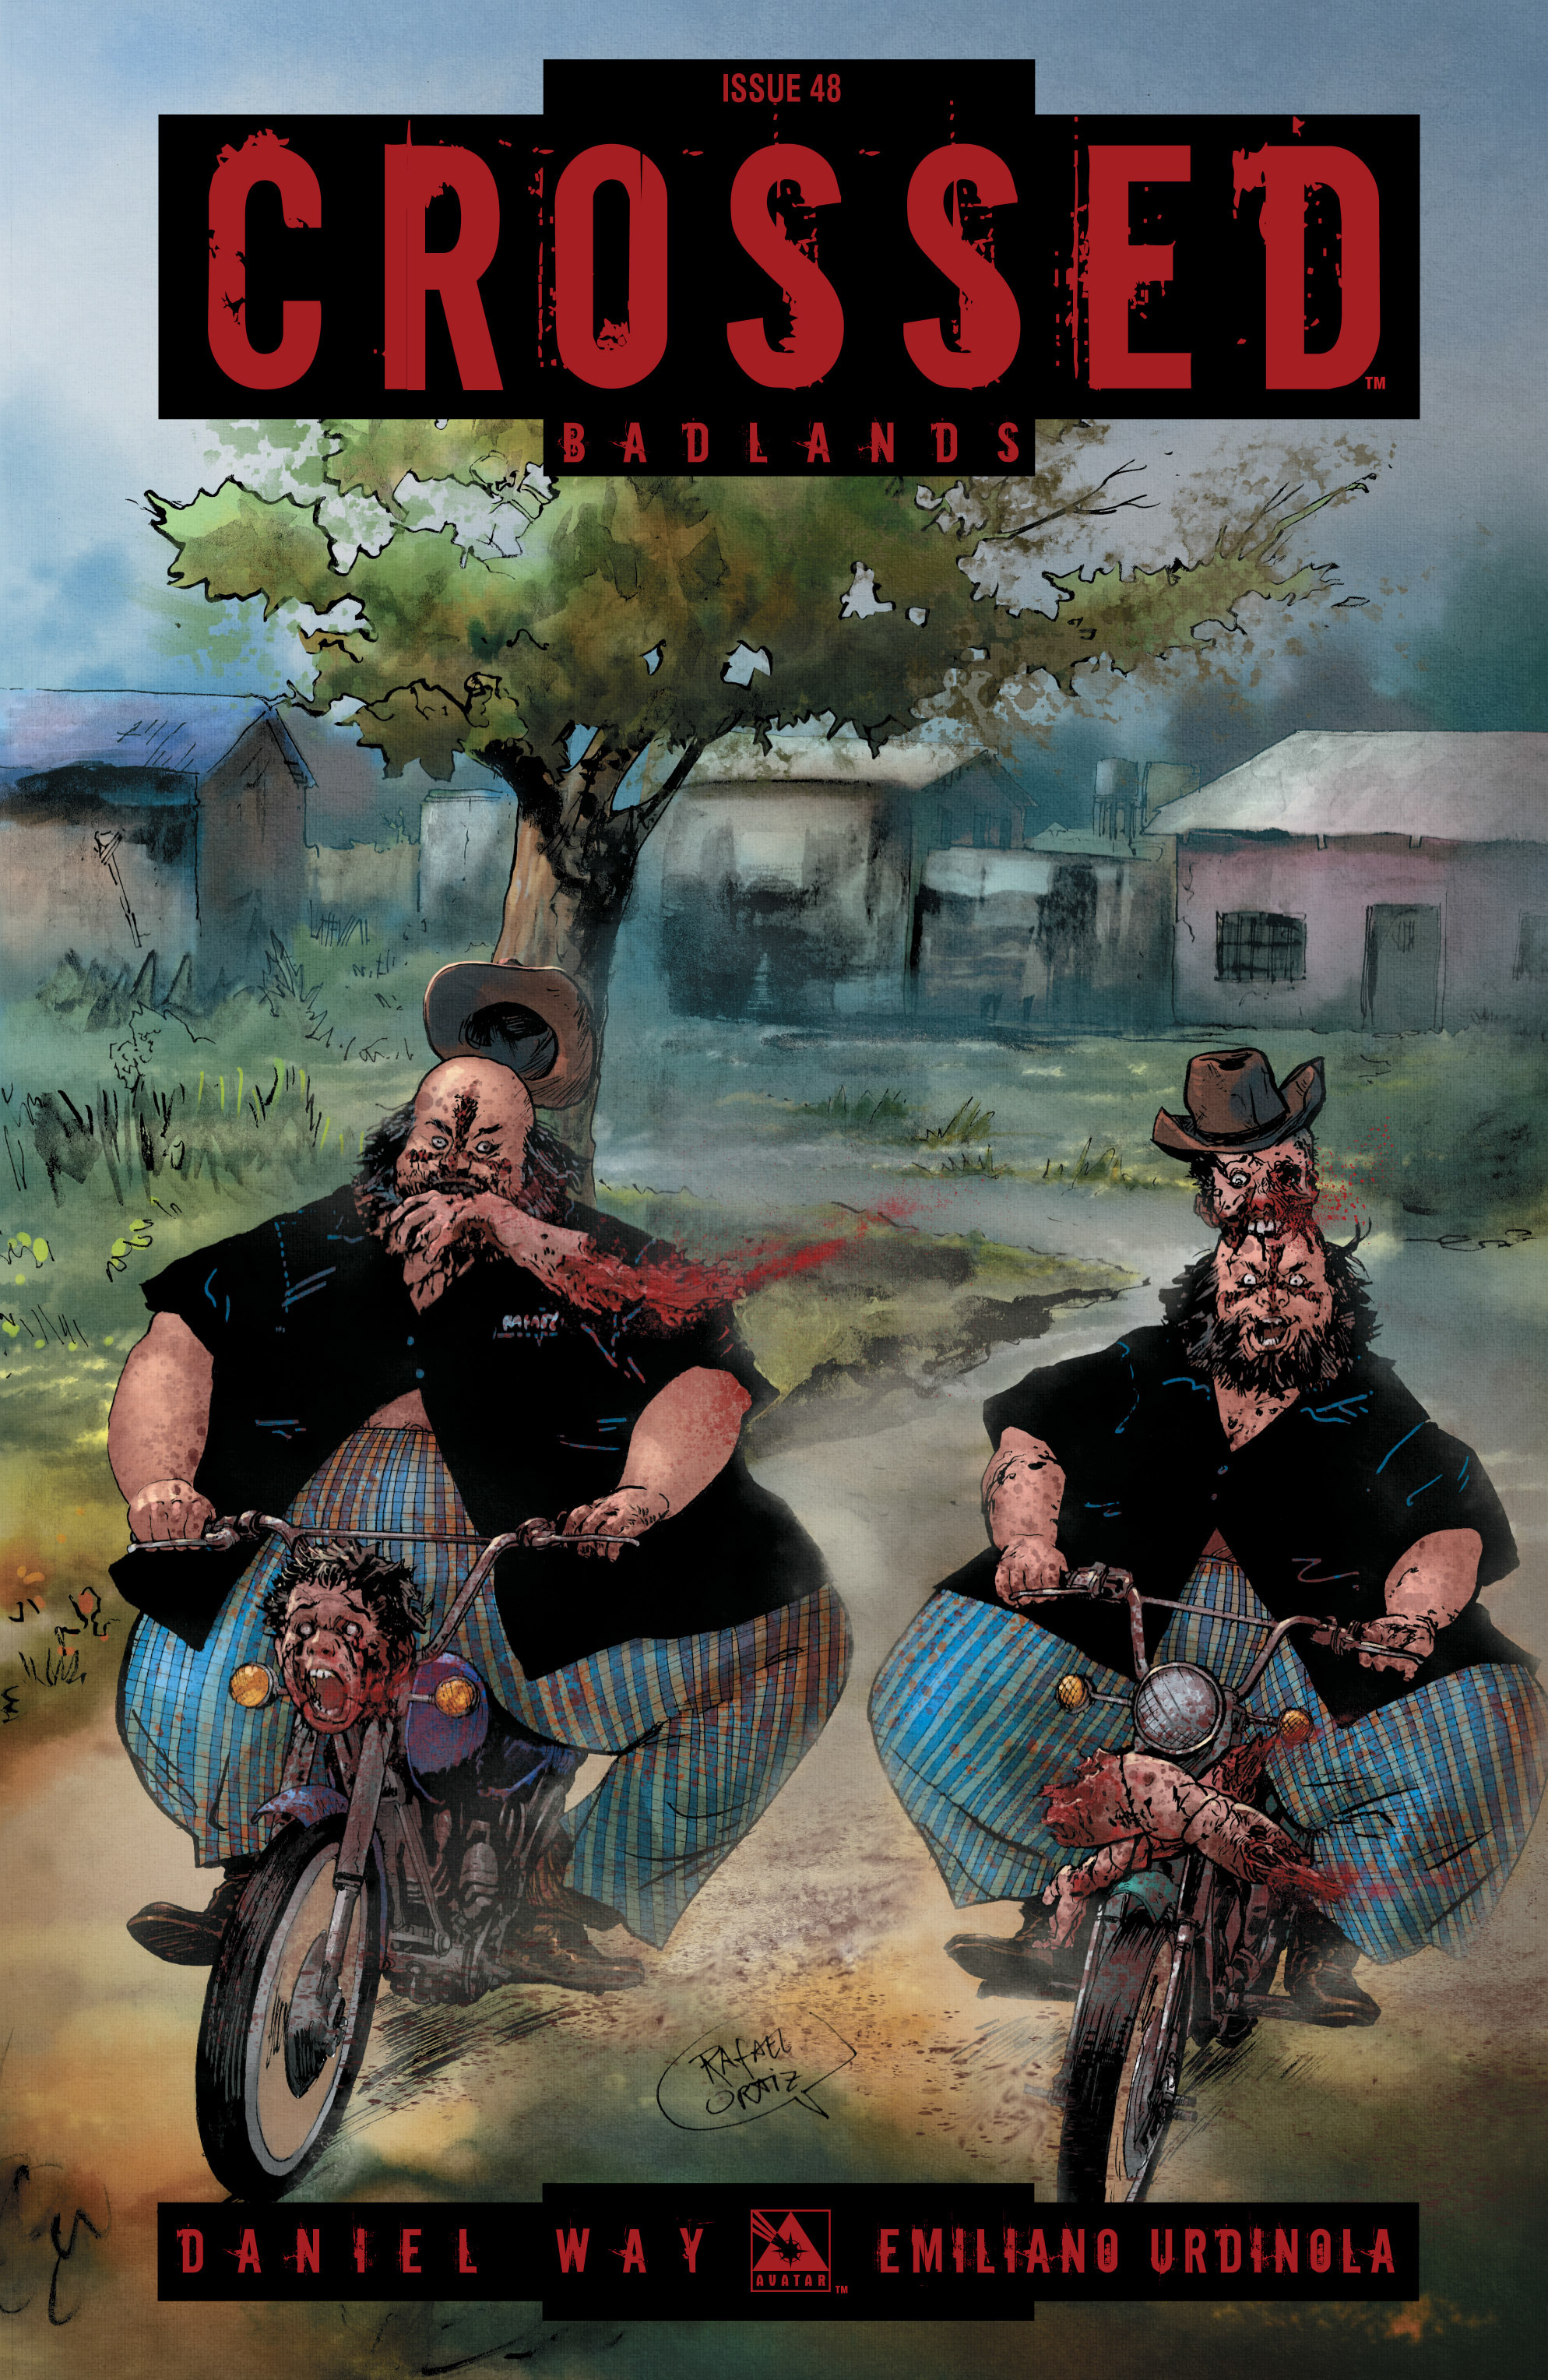 Read online Crossed: Badlands comic -  Issue #48 - 1